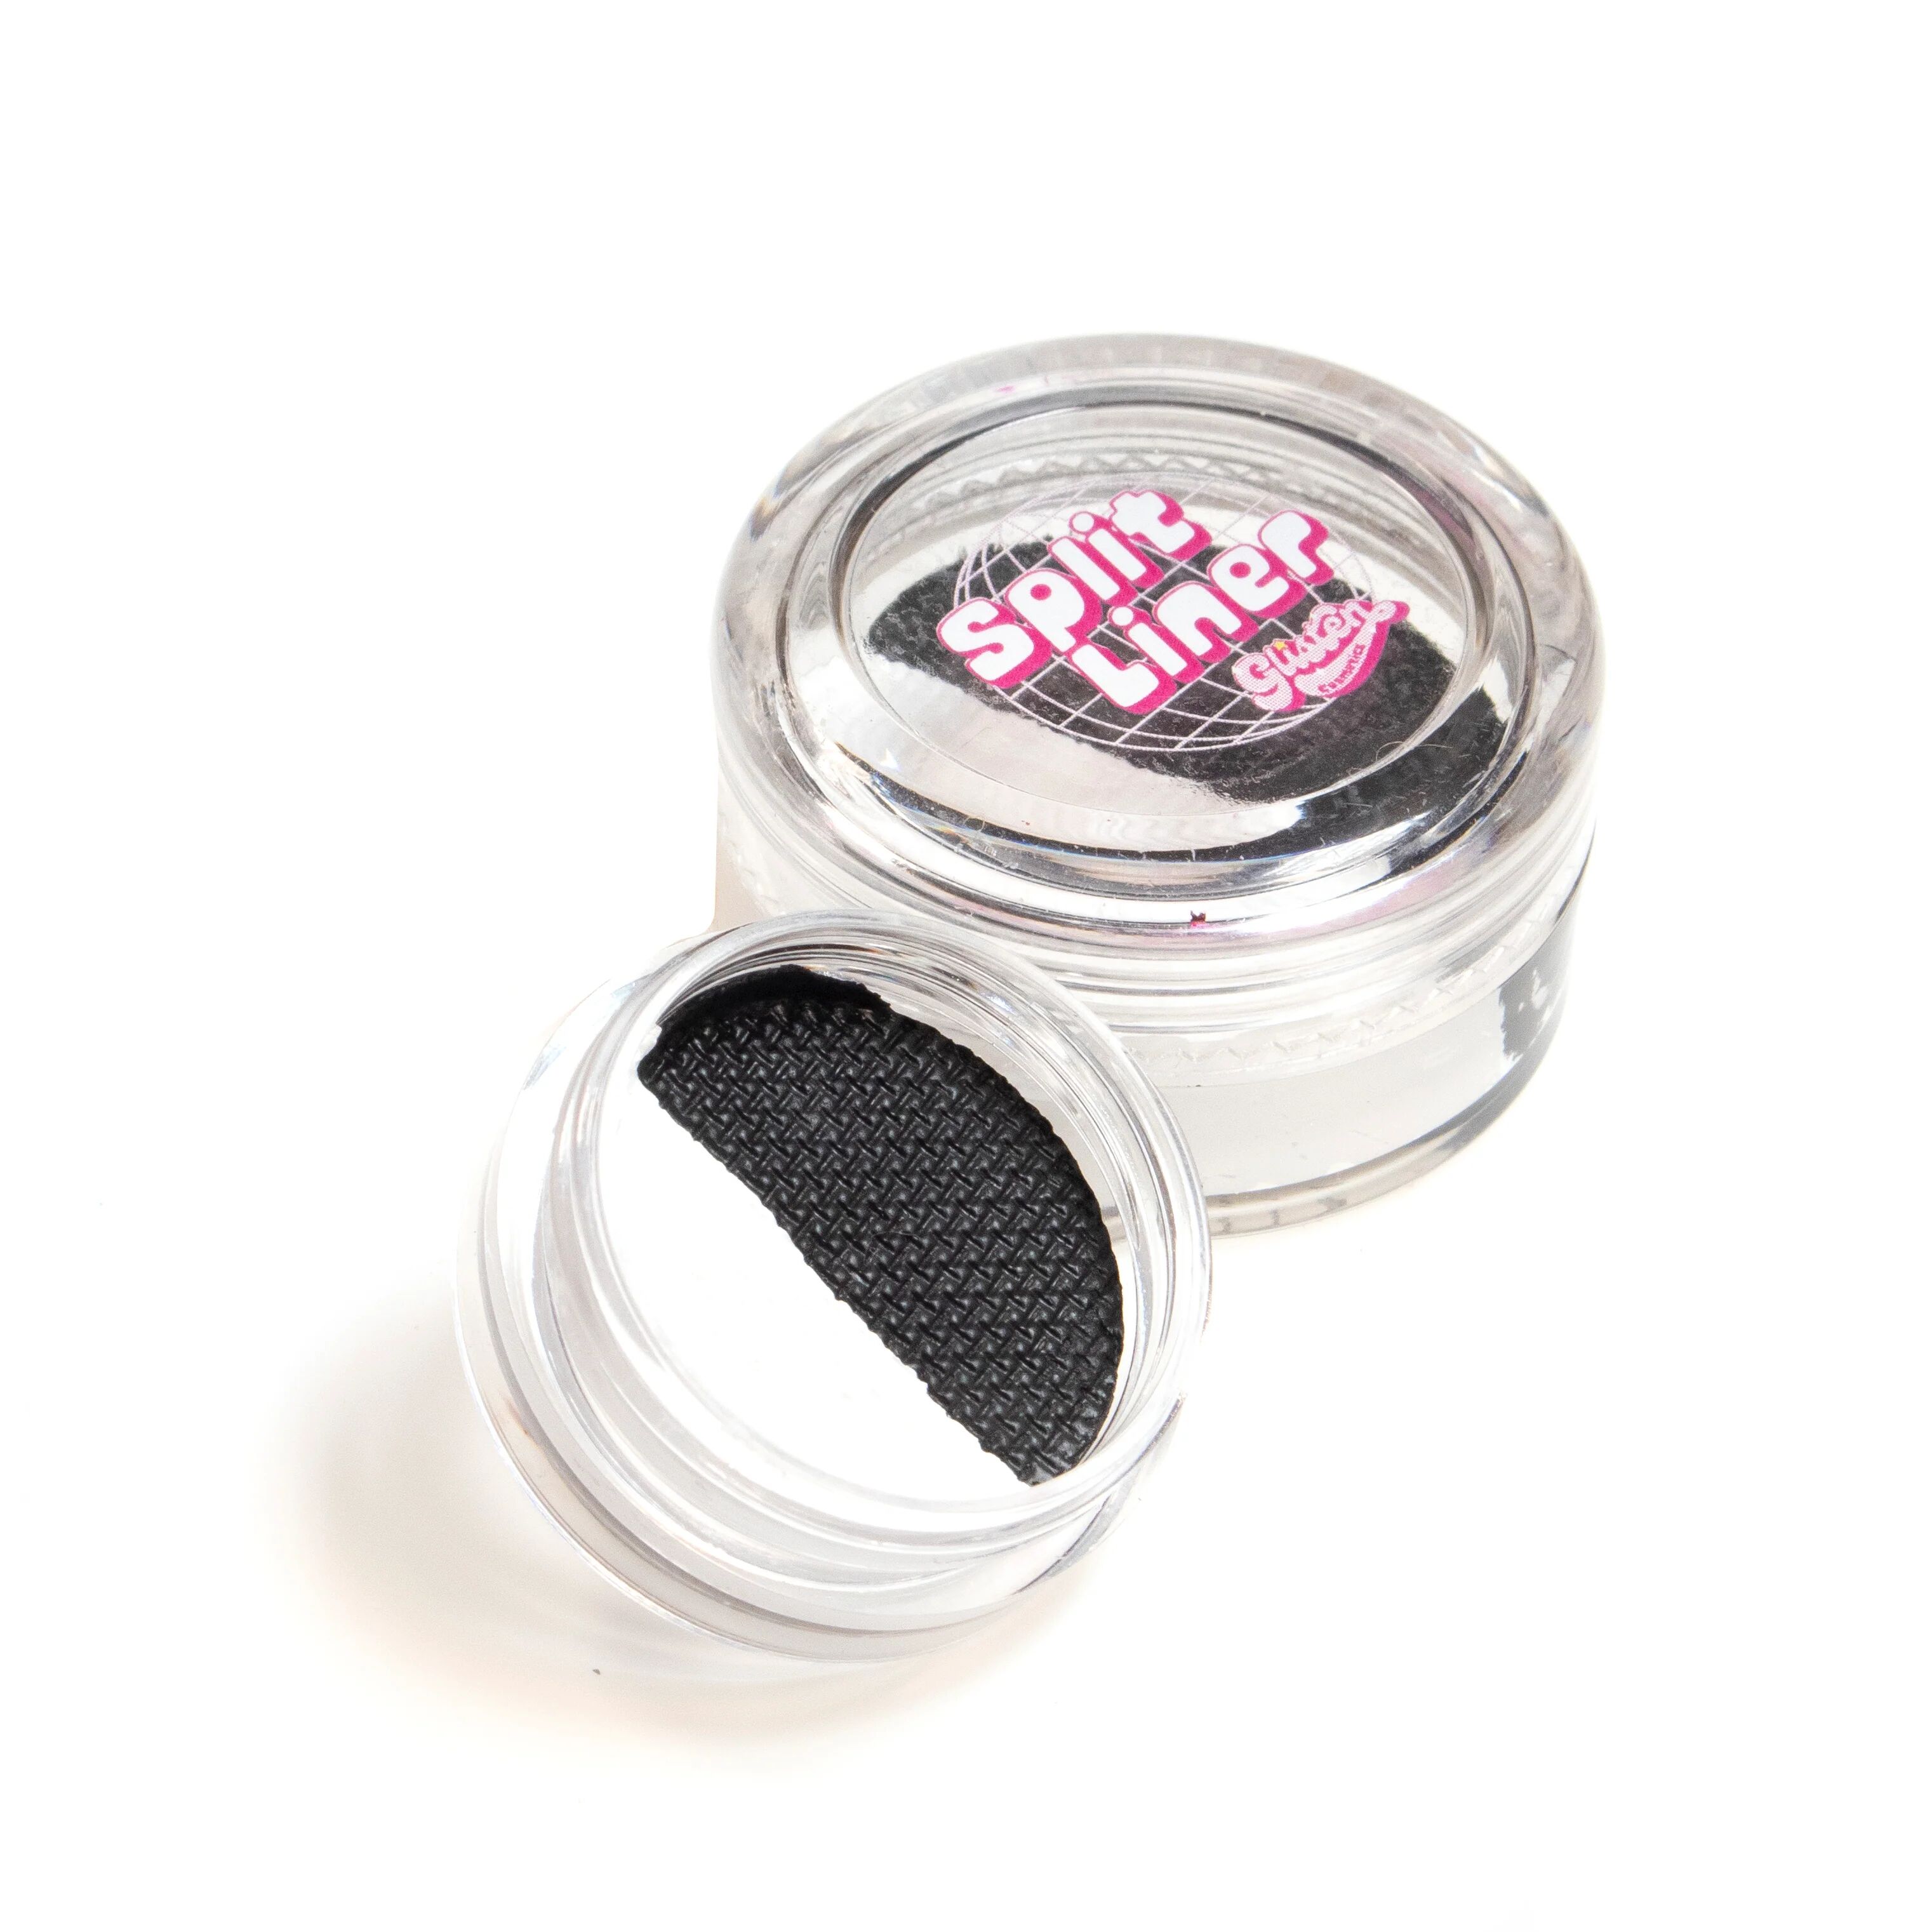 Glisten Cosmetics Coke Float (Black and White) Split Liner - Eyeliner - Glisten Cosmetic Small - 3g